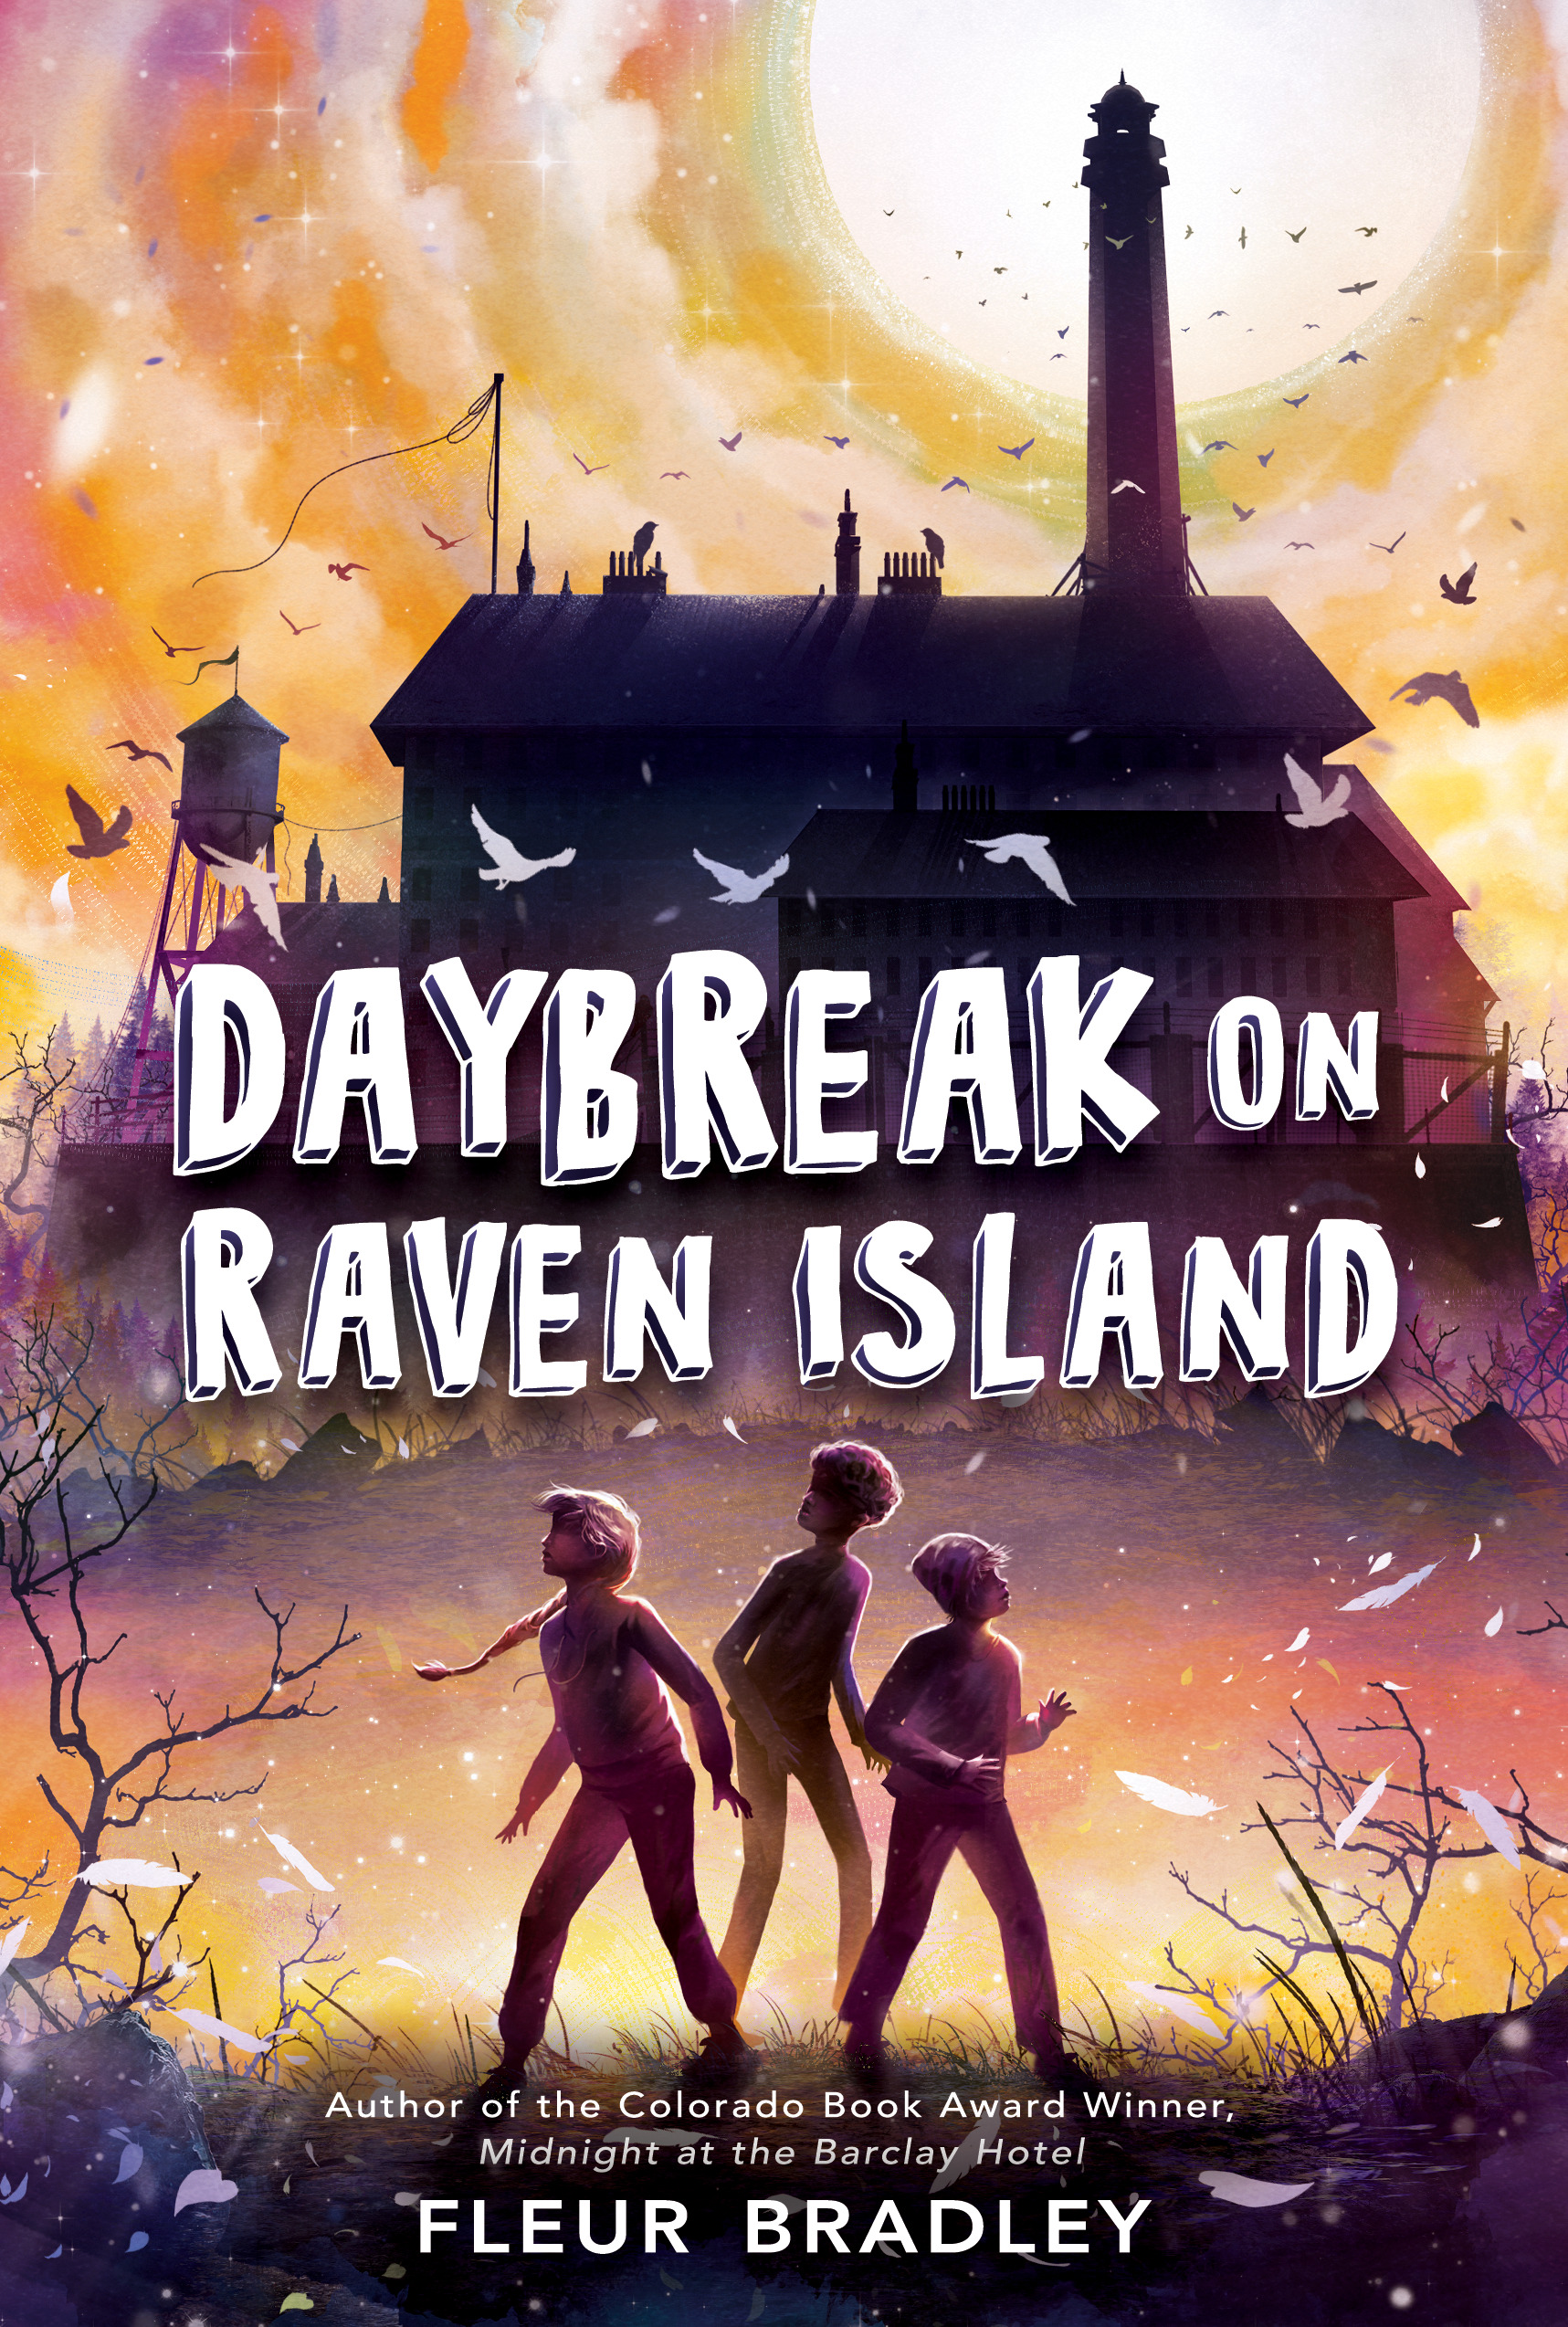 Daybreak on Raven Island | 9-12 years old